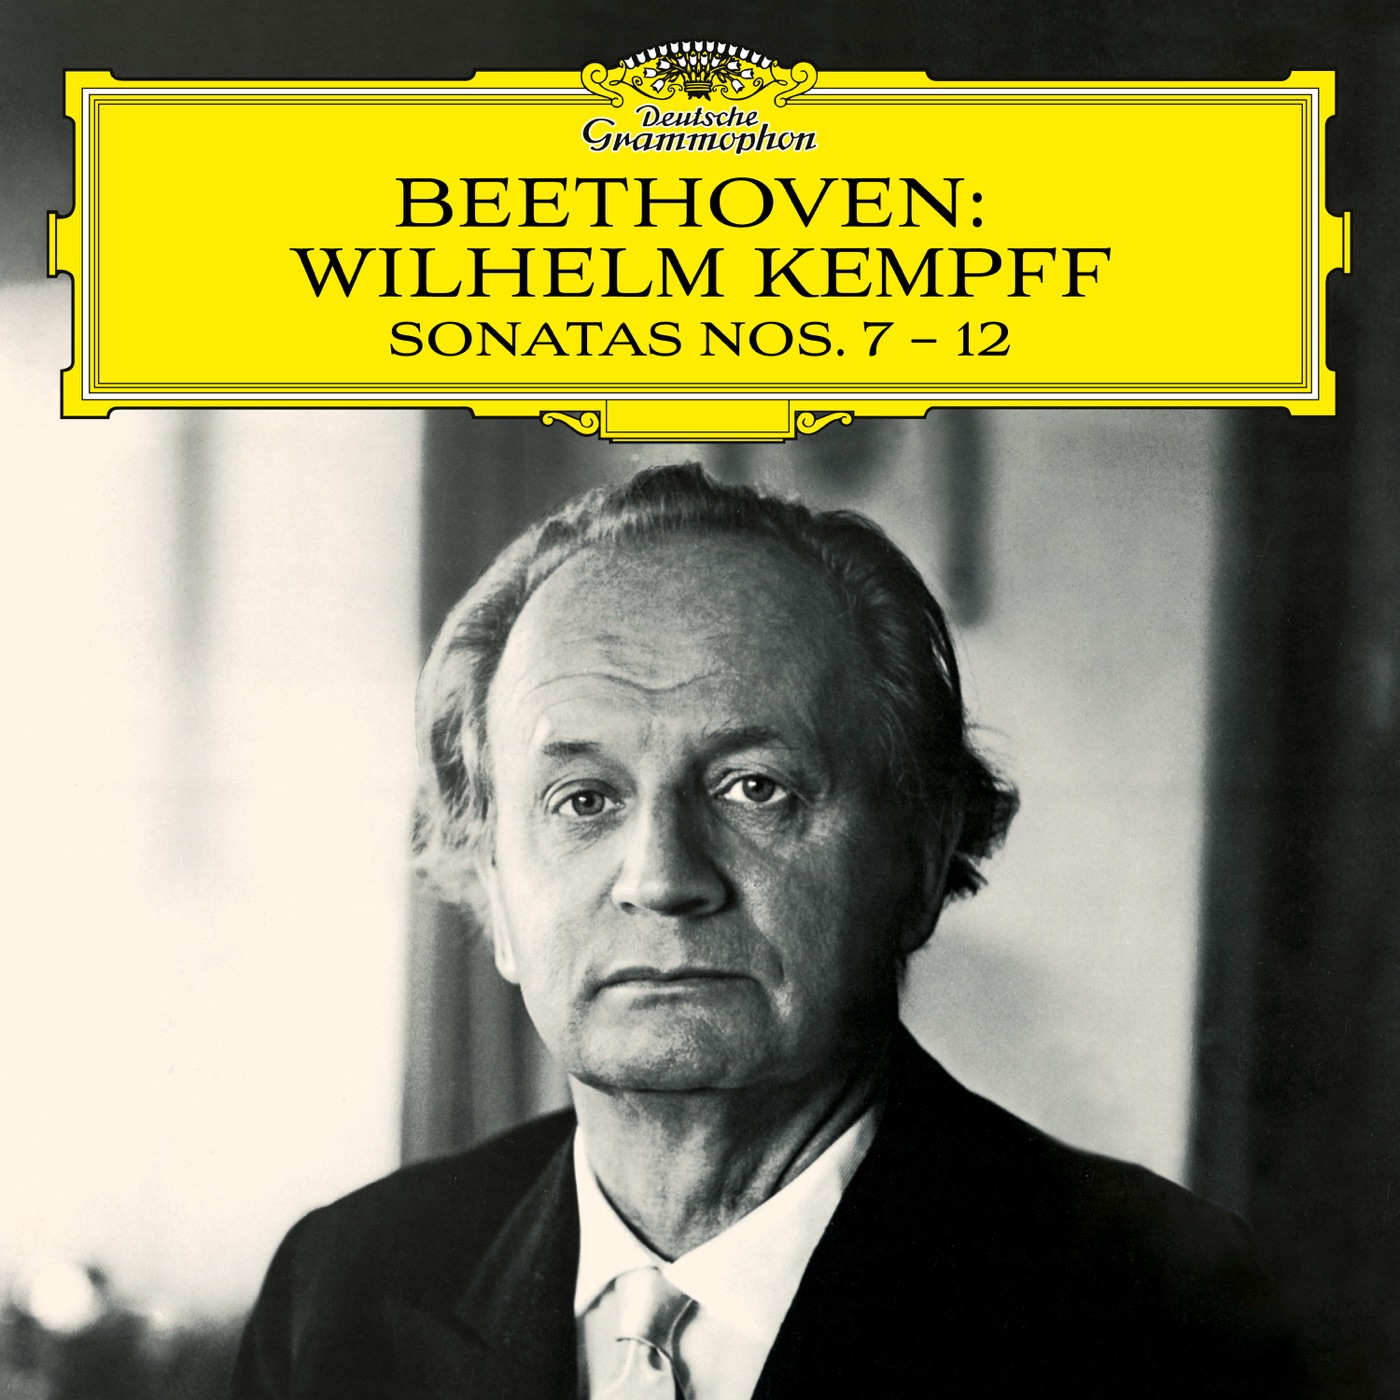 Beethoven: Sonatas Nos. 7 - 12 by Wilhelm Kempff, Ludwig van Beethoven